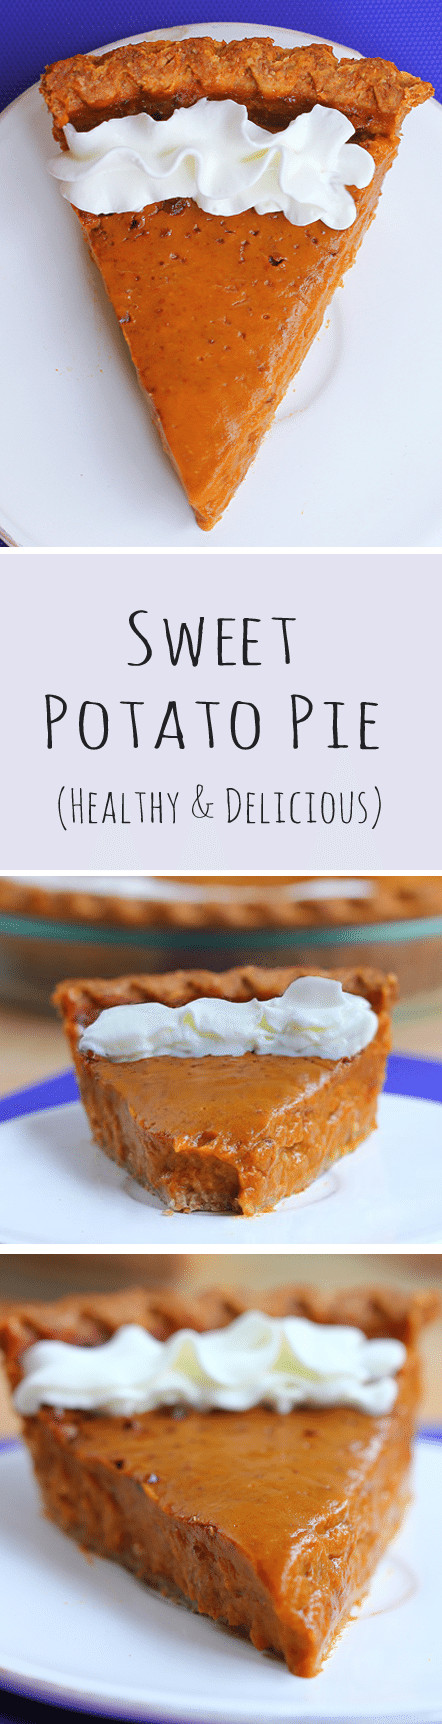 Is Sweet Potato Pie Healthy the 20 Best Ideas for Healthy Sweet Potato Pie with Homemade Pie Crust